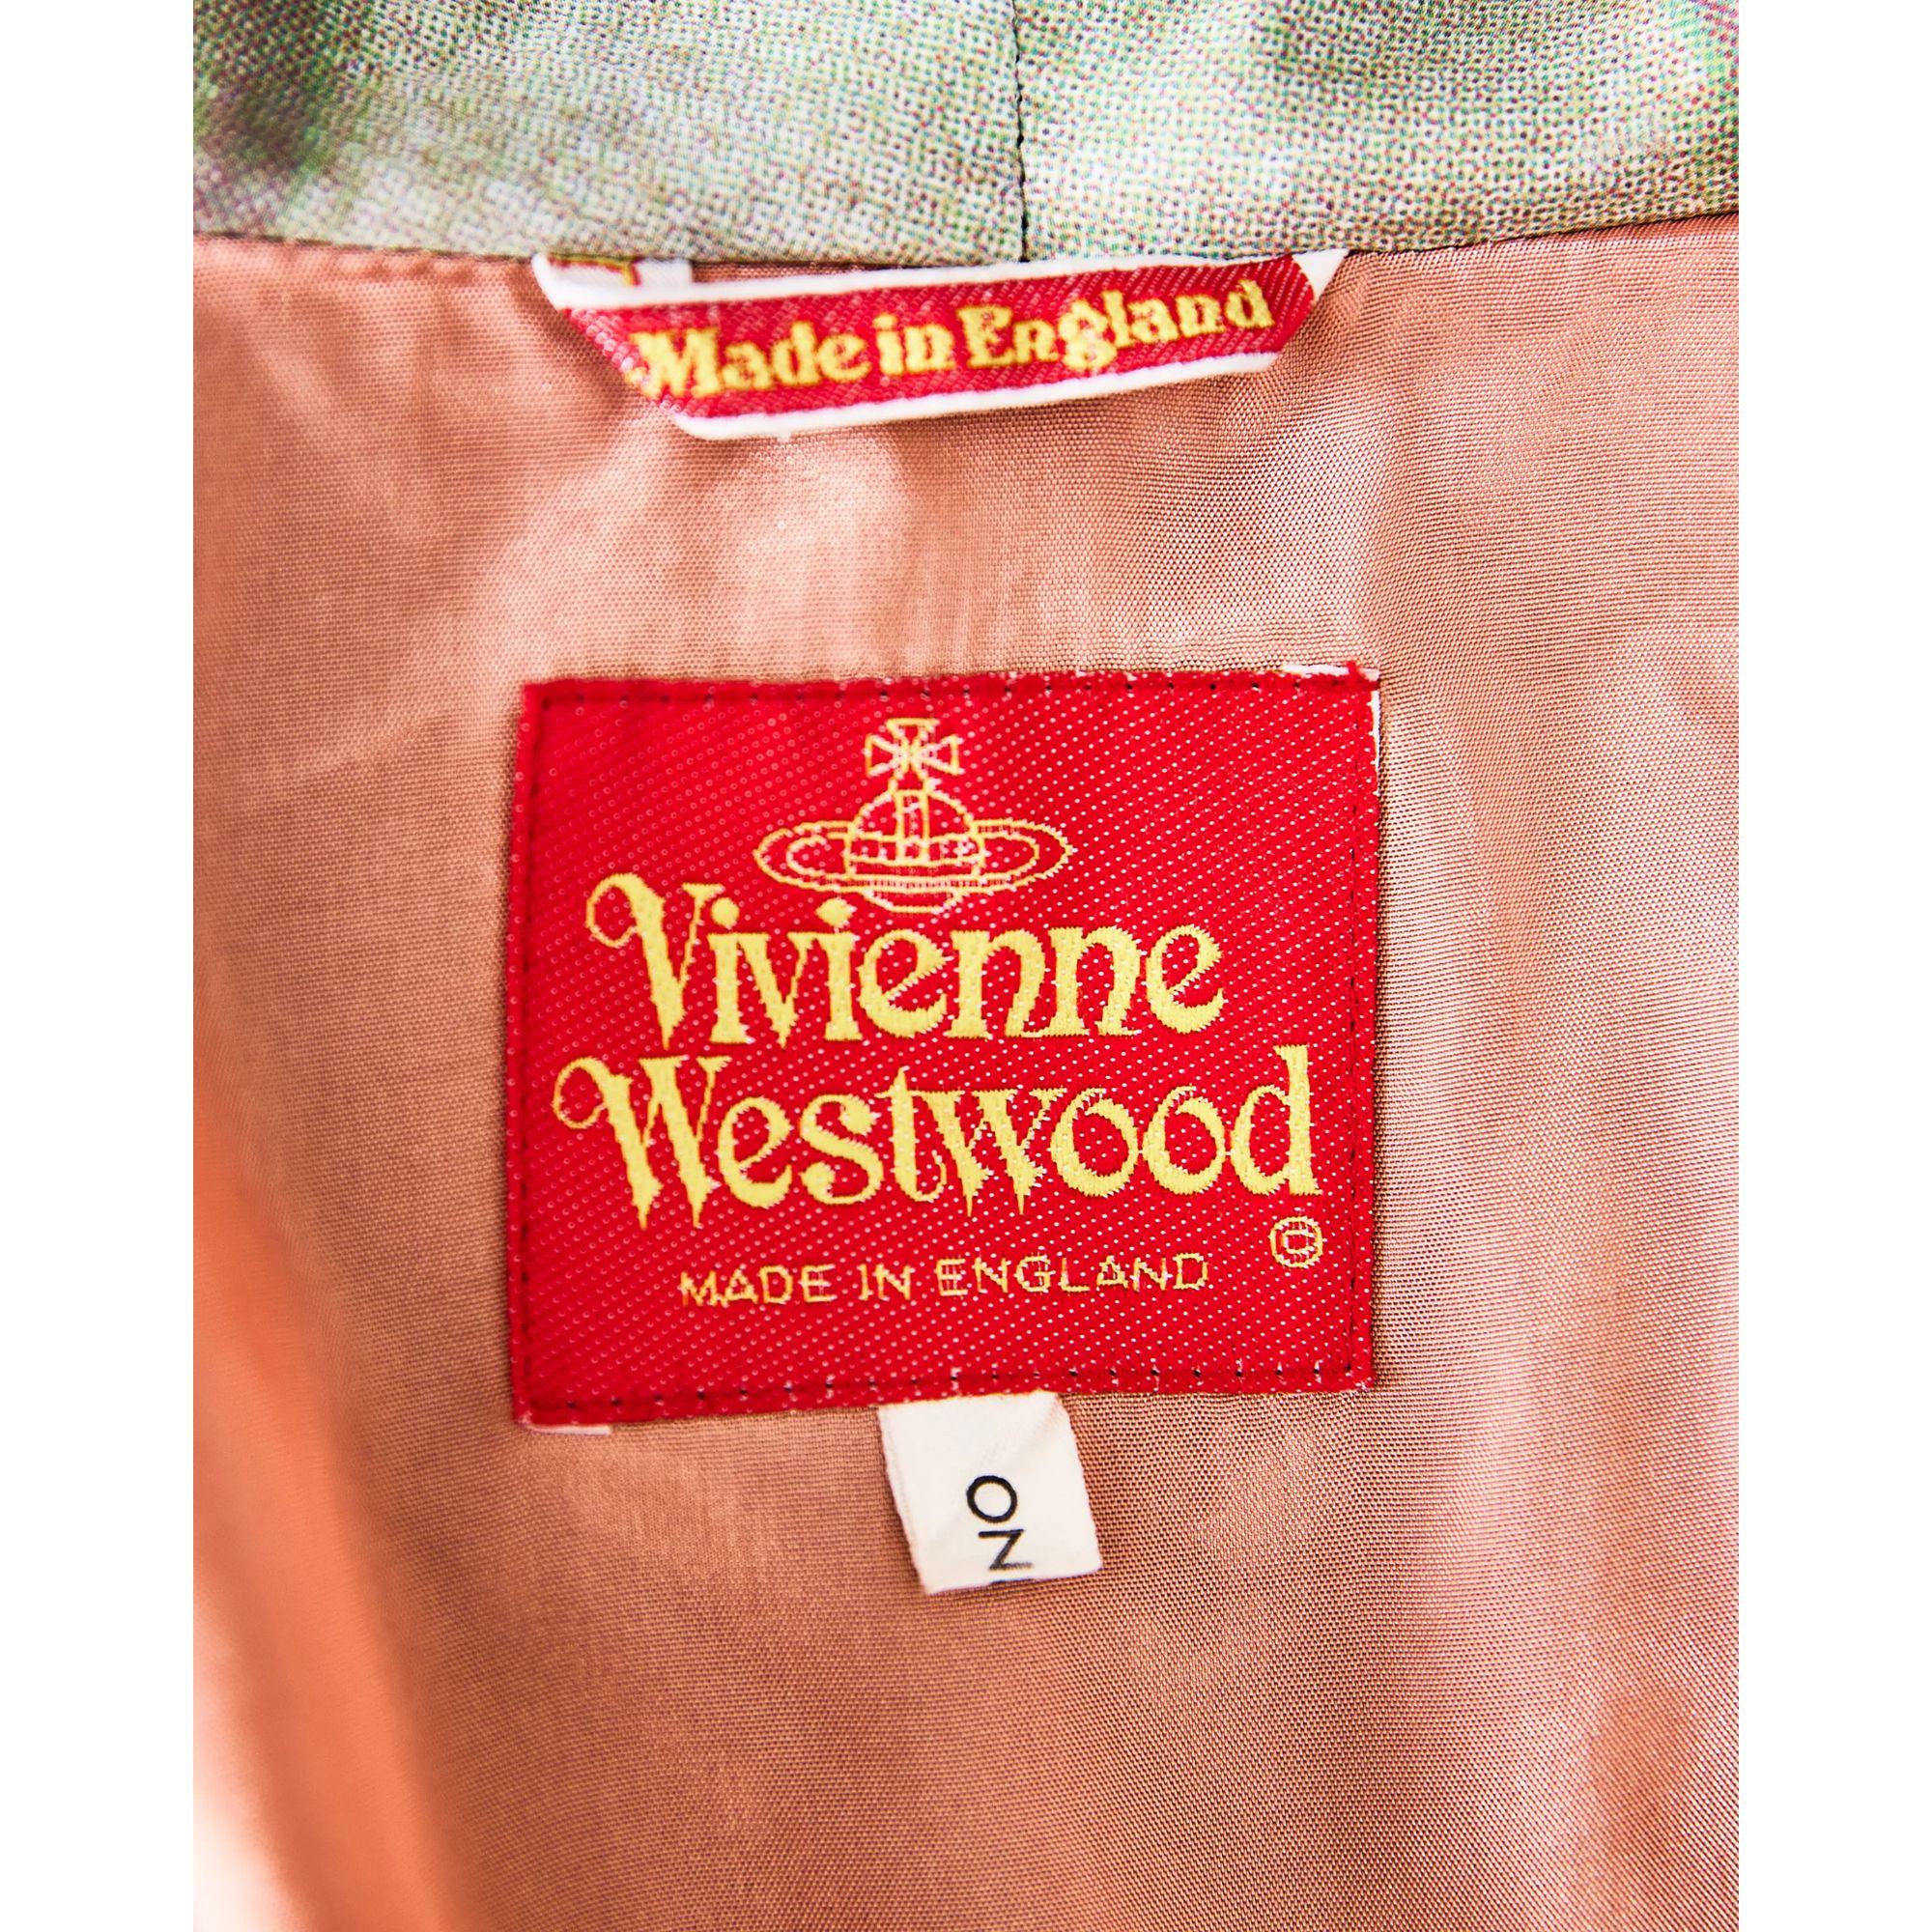 S/S 1992 Vivienne Westwood 'Salon' Collection Printed Velvet Shawl Jacket 6